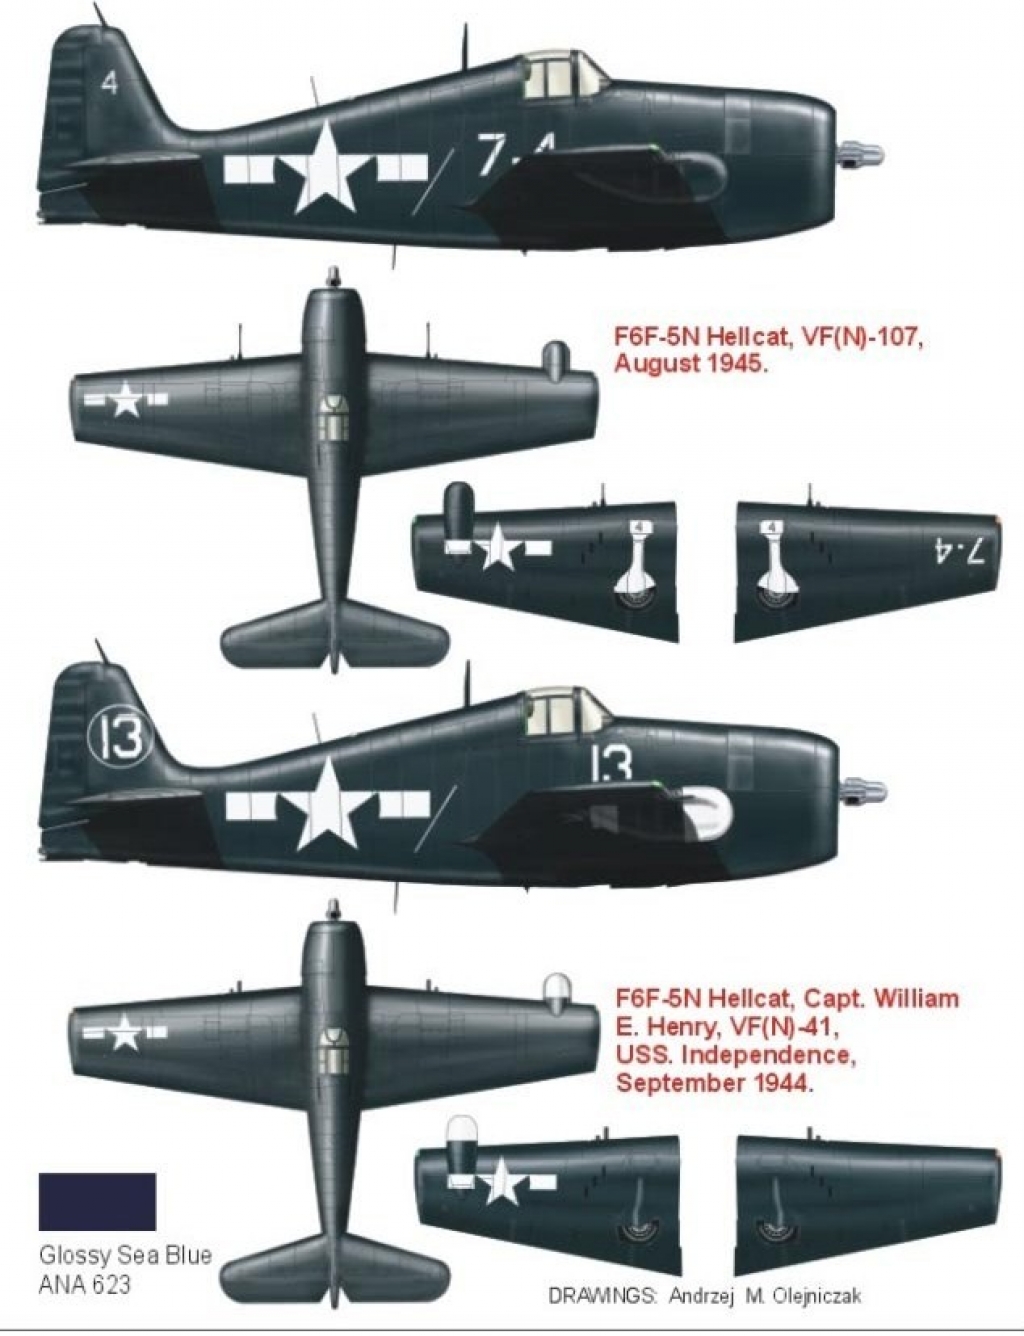 F6F-5 N Decacalcs